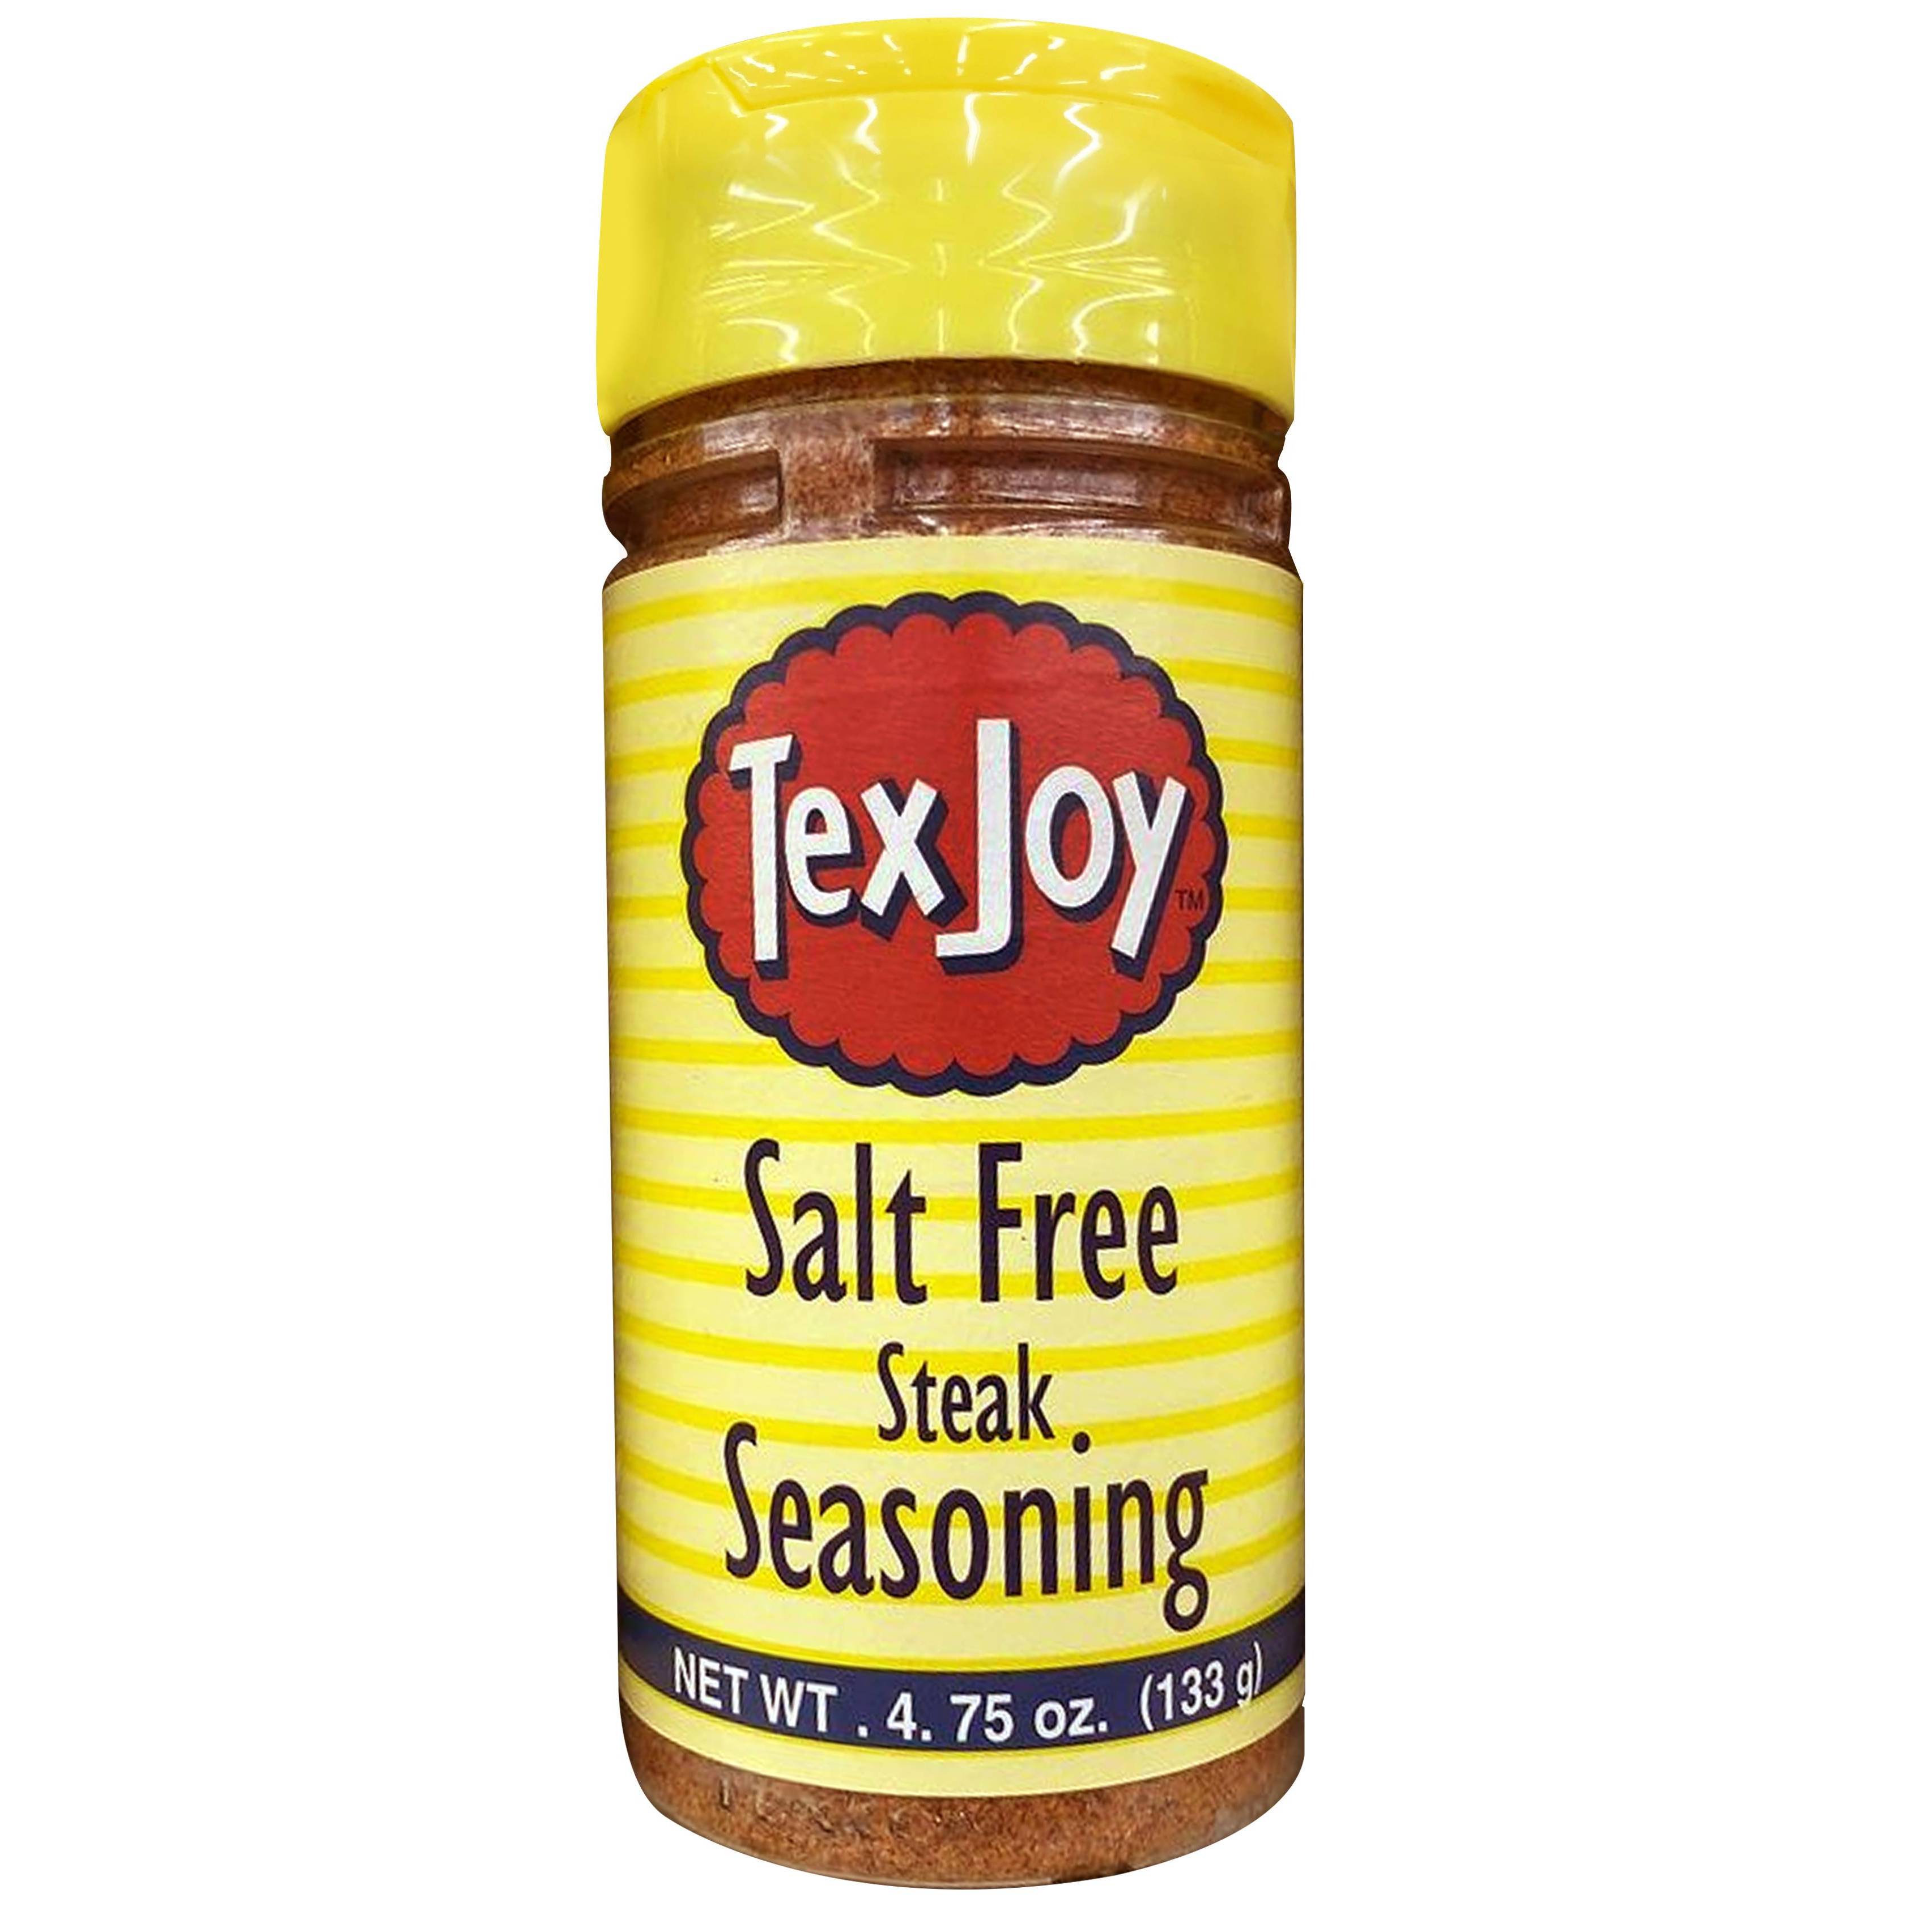 http://www.texjoy.com/Shared/Images/Product/Steak-Seasoning-Salt-Free-4-75-oz/SaltFree-StkSeasoning.jpg